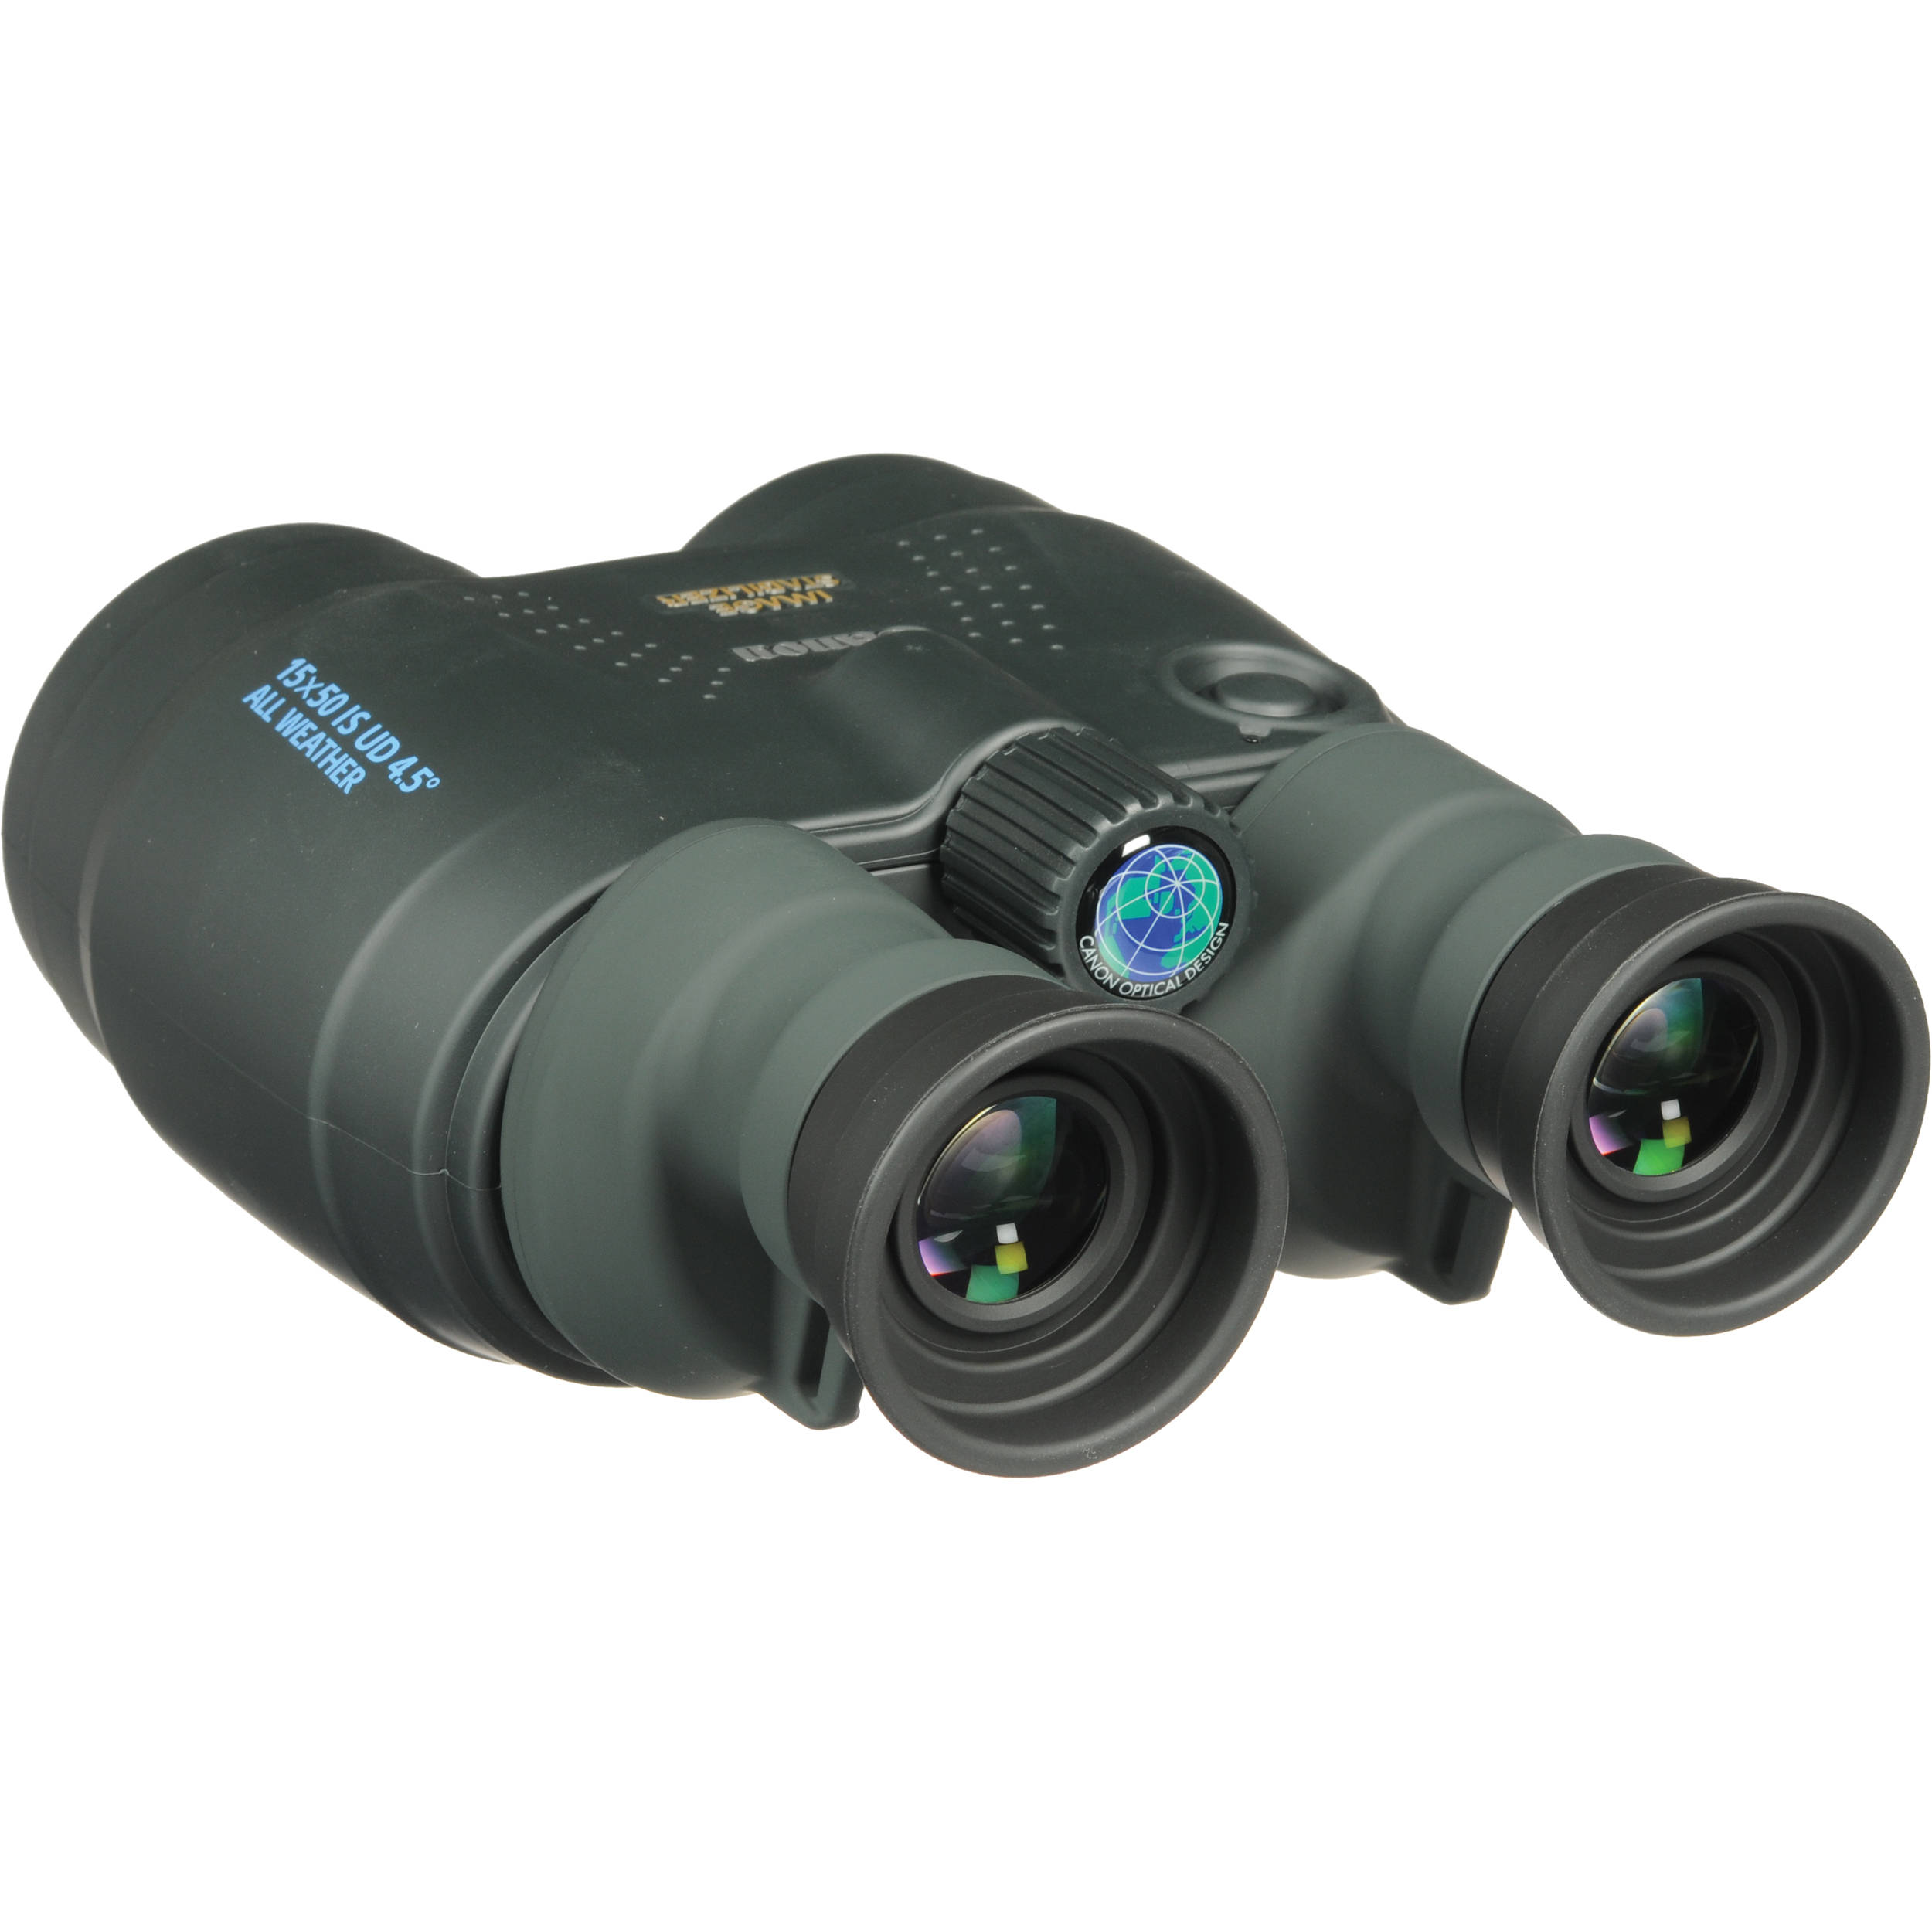 canon image stabilized binoculars 15x50